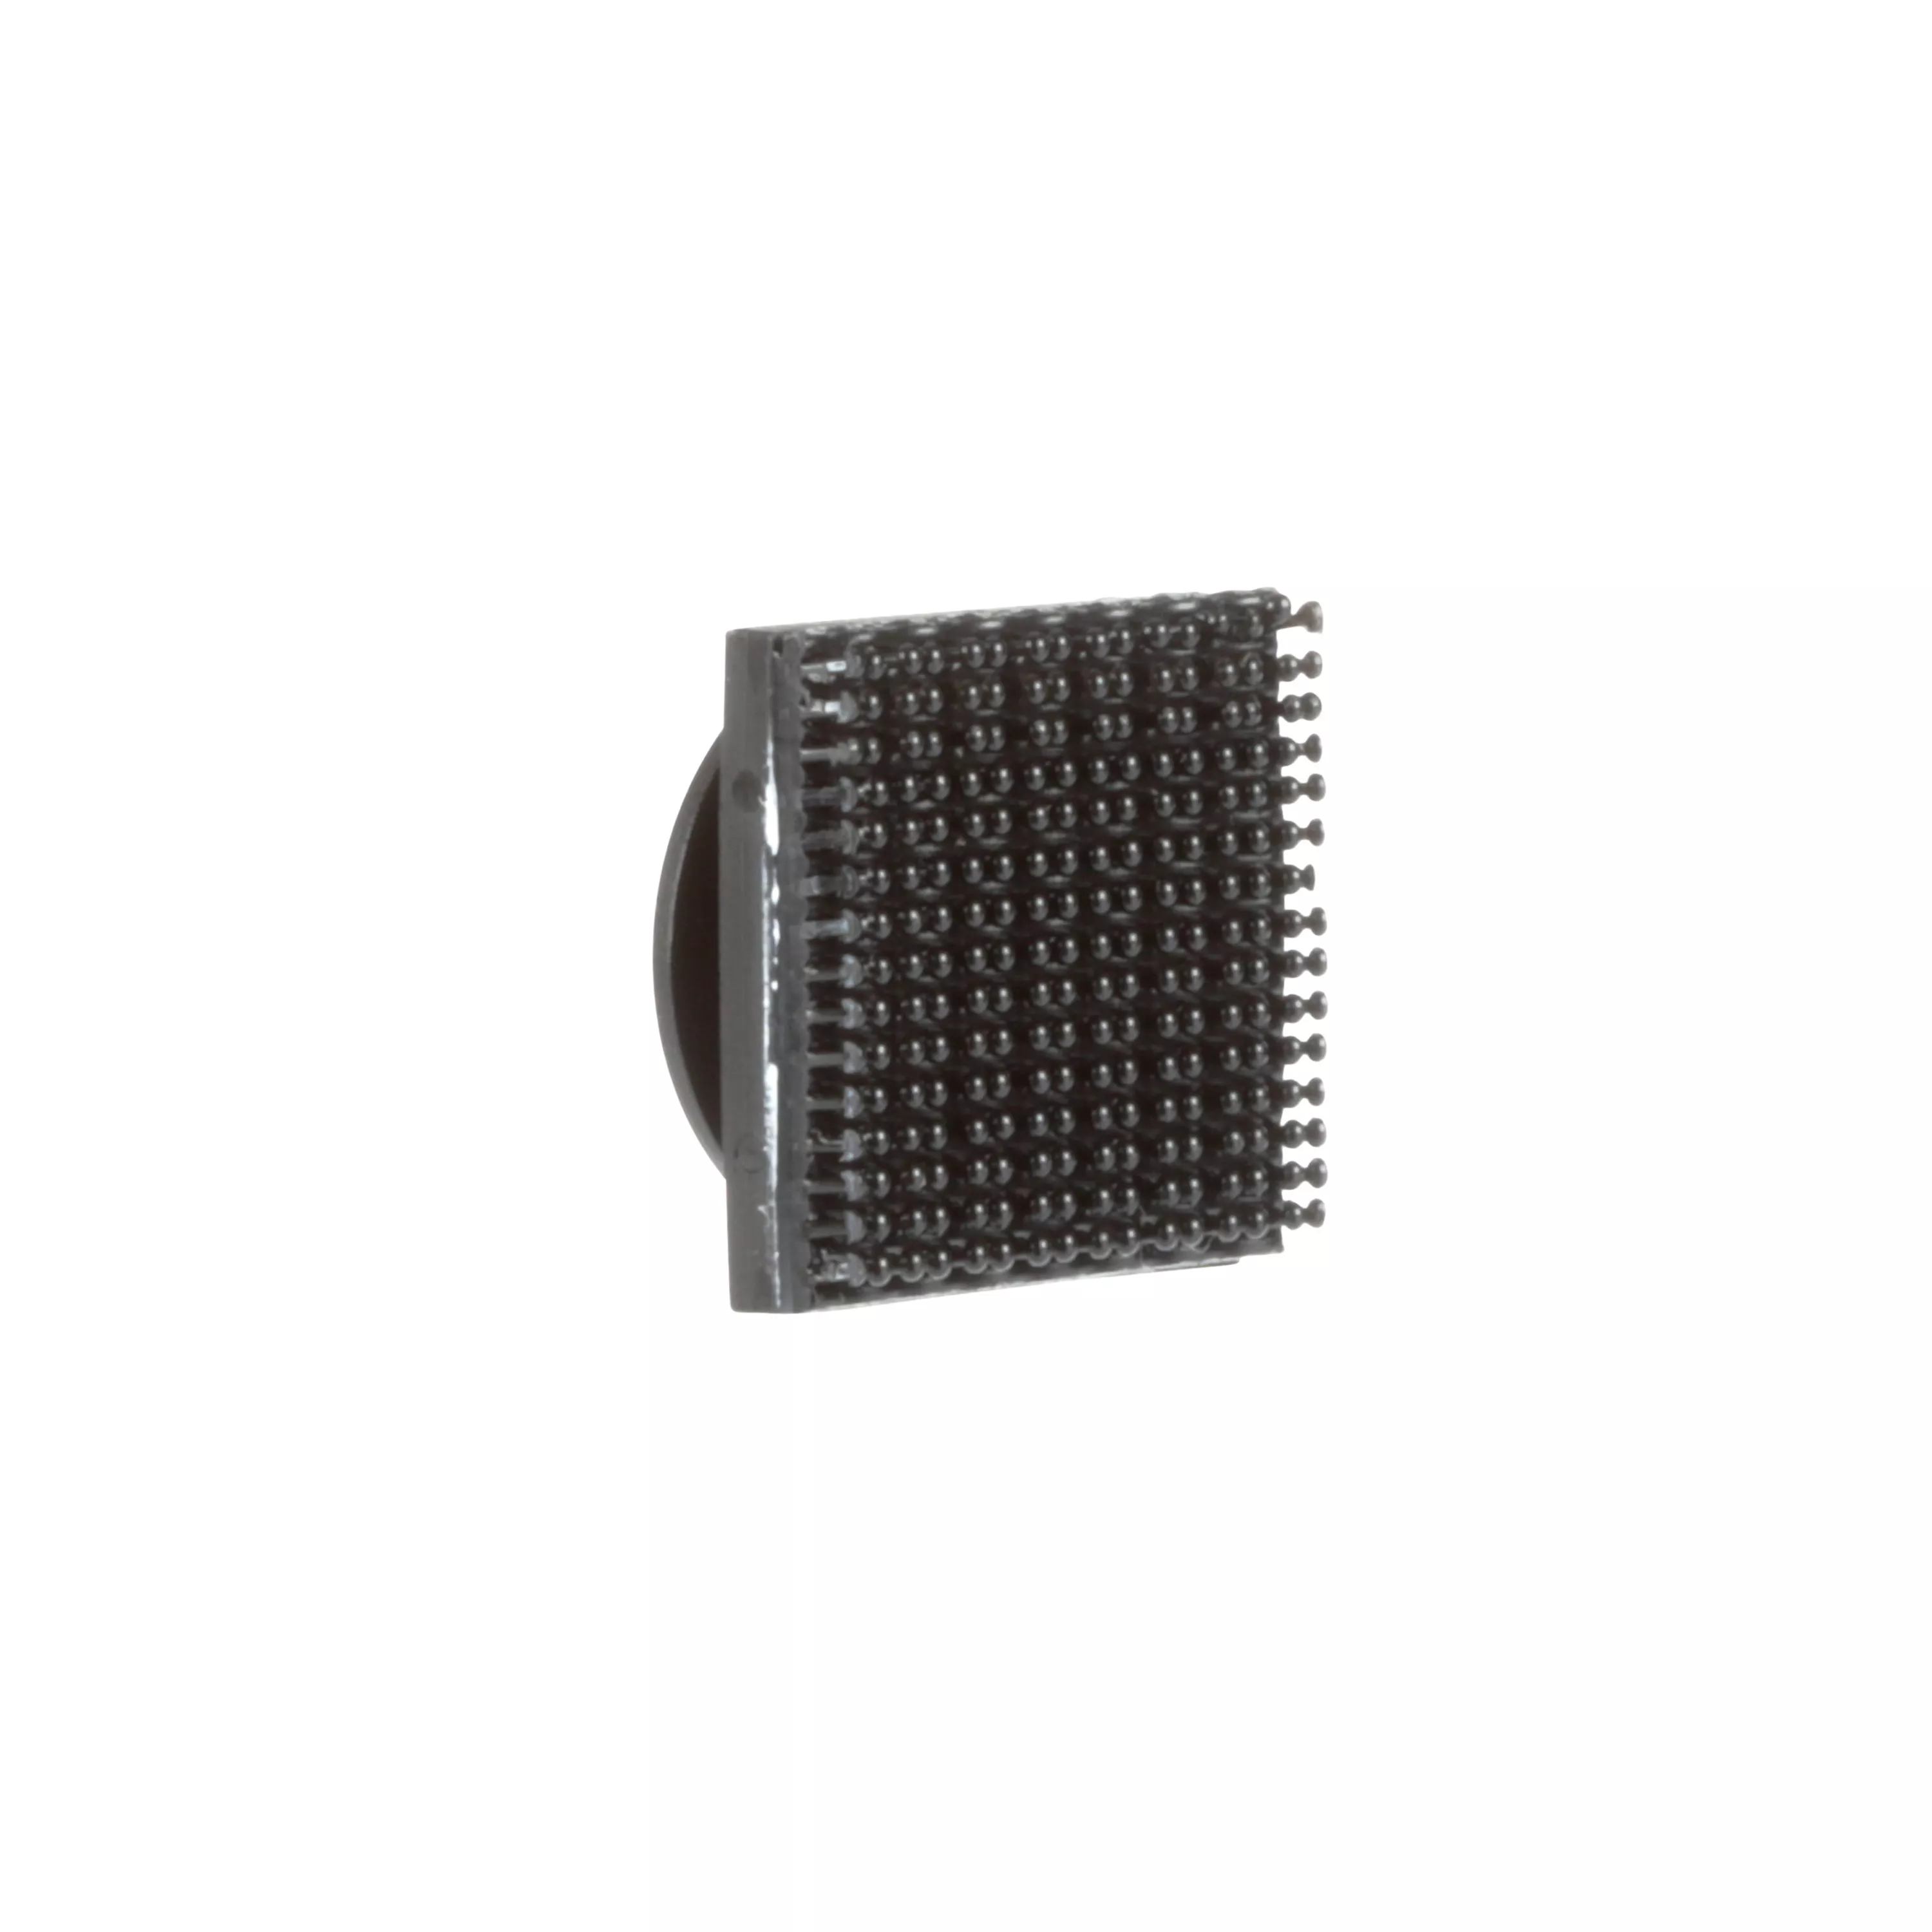 3M™ Dual Lock™ Reclosable Fastener SJ3731, Black, Pop-in Piece Part,
Stem Density 400, 20 mm x 20 mm, 5000 Each/Case